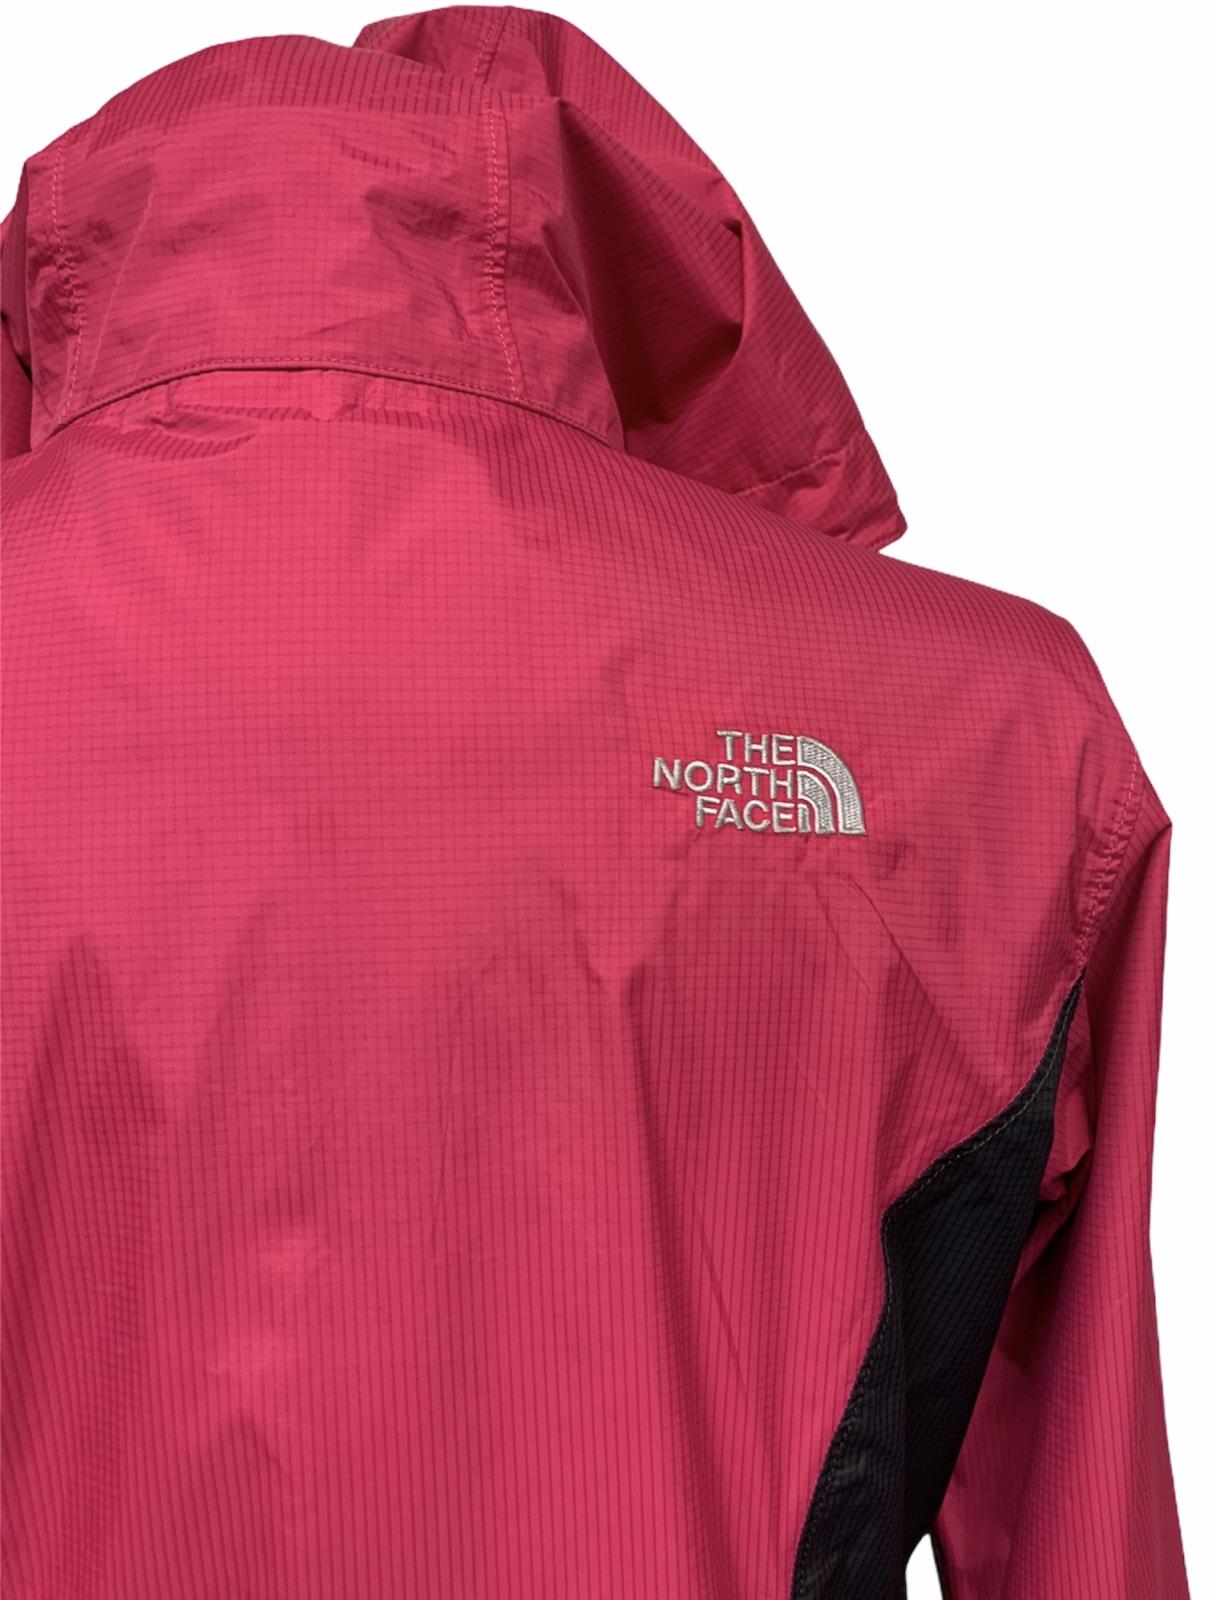 The North Face Hyvent Rain Jacket Hooded Full Zip Up Women’s Medium ...